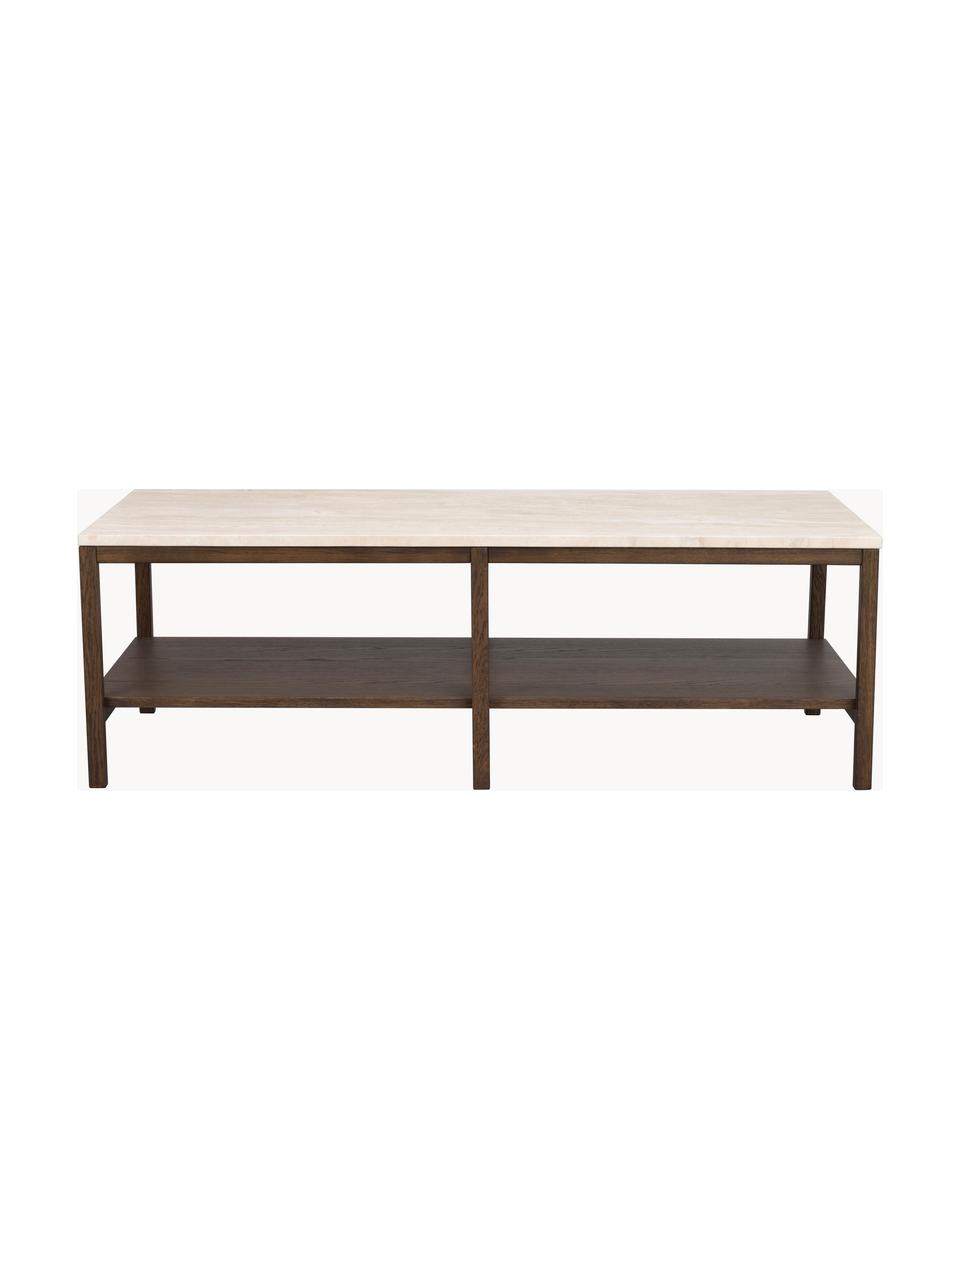 Grande table basse Orwel, Travertin beige clair, chêne foncé, larg. 140 x haut. 60 cm